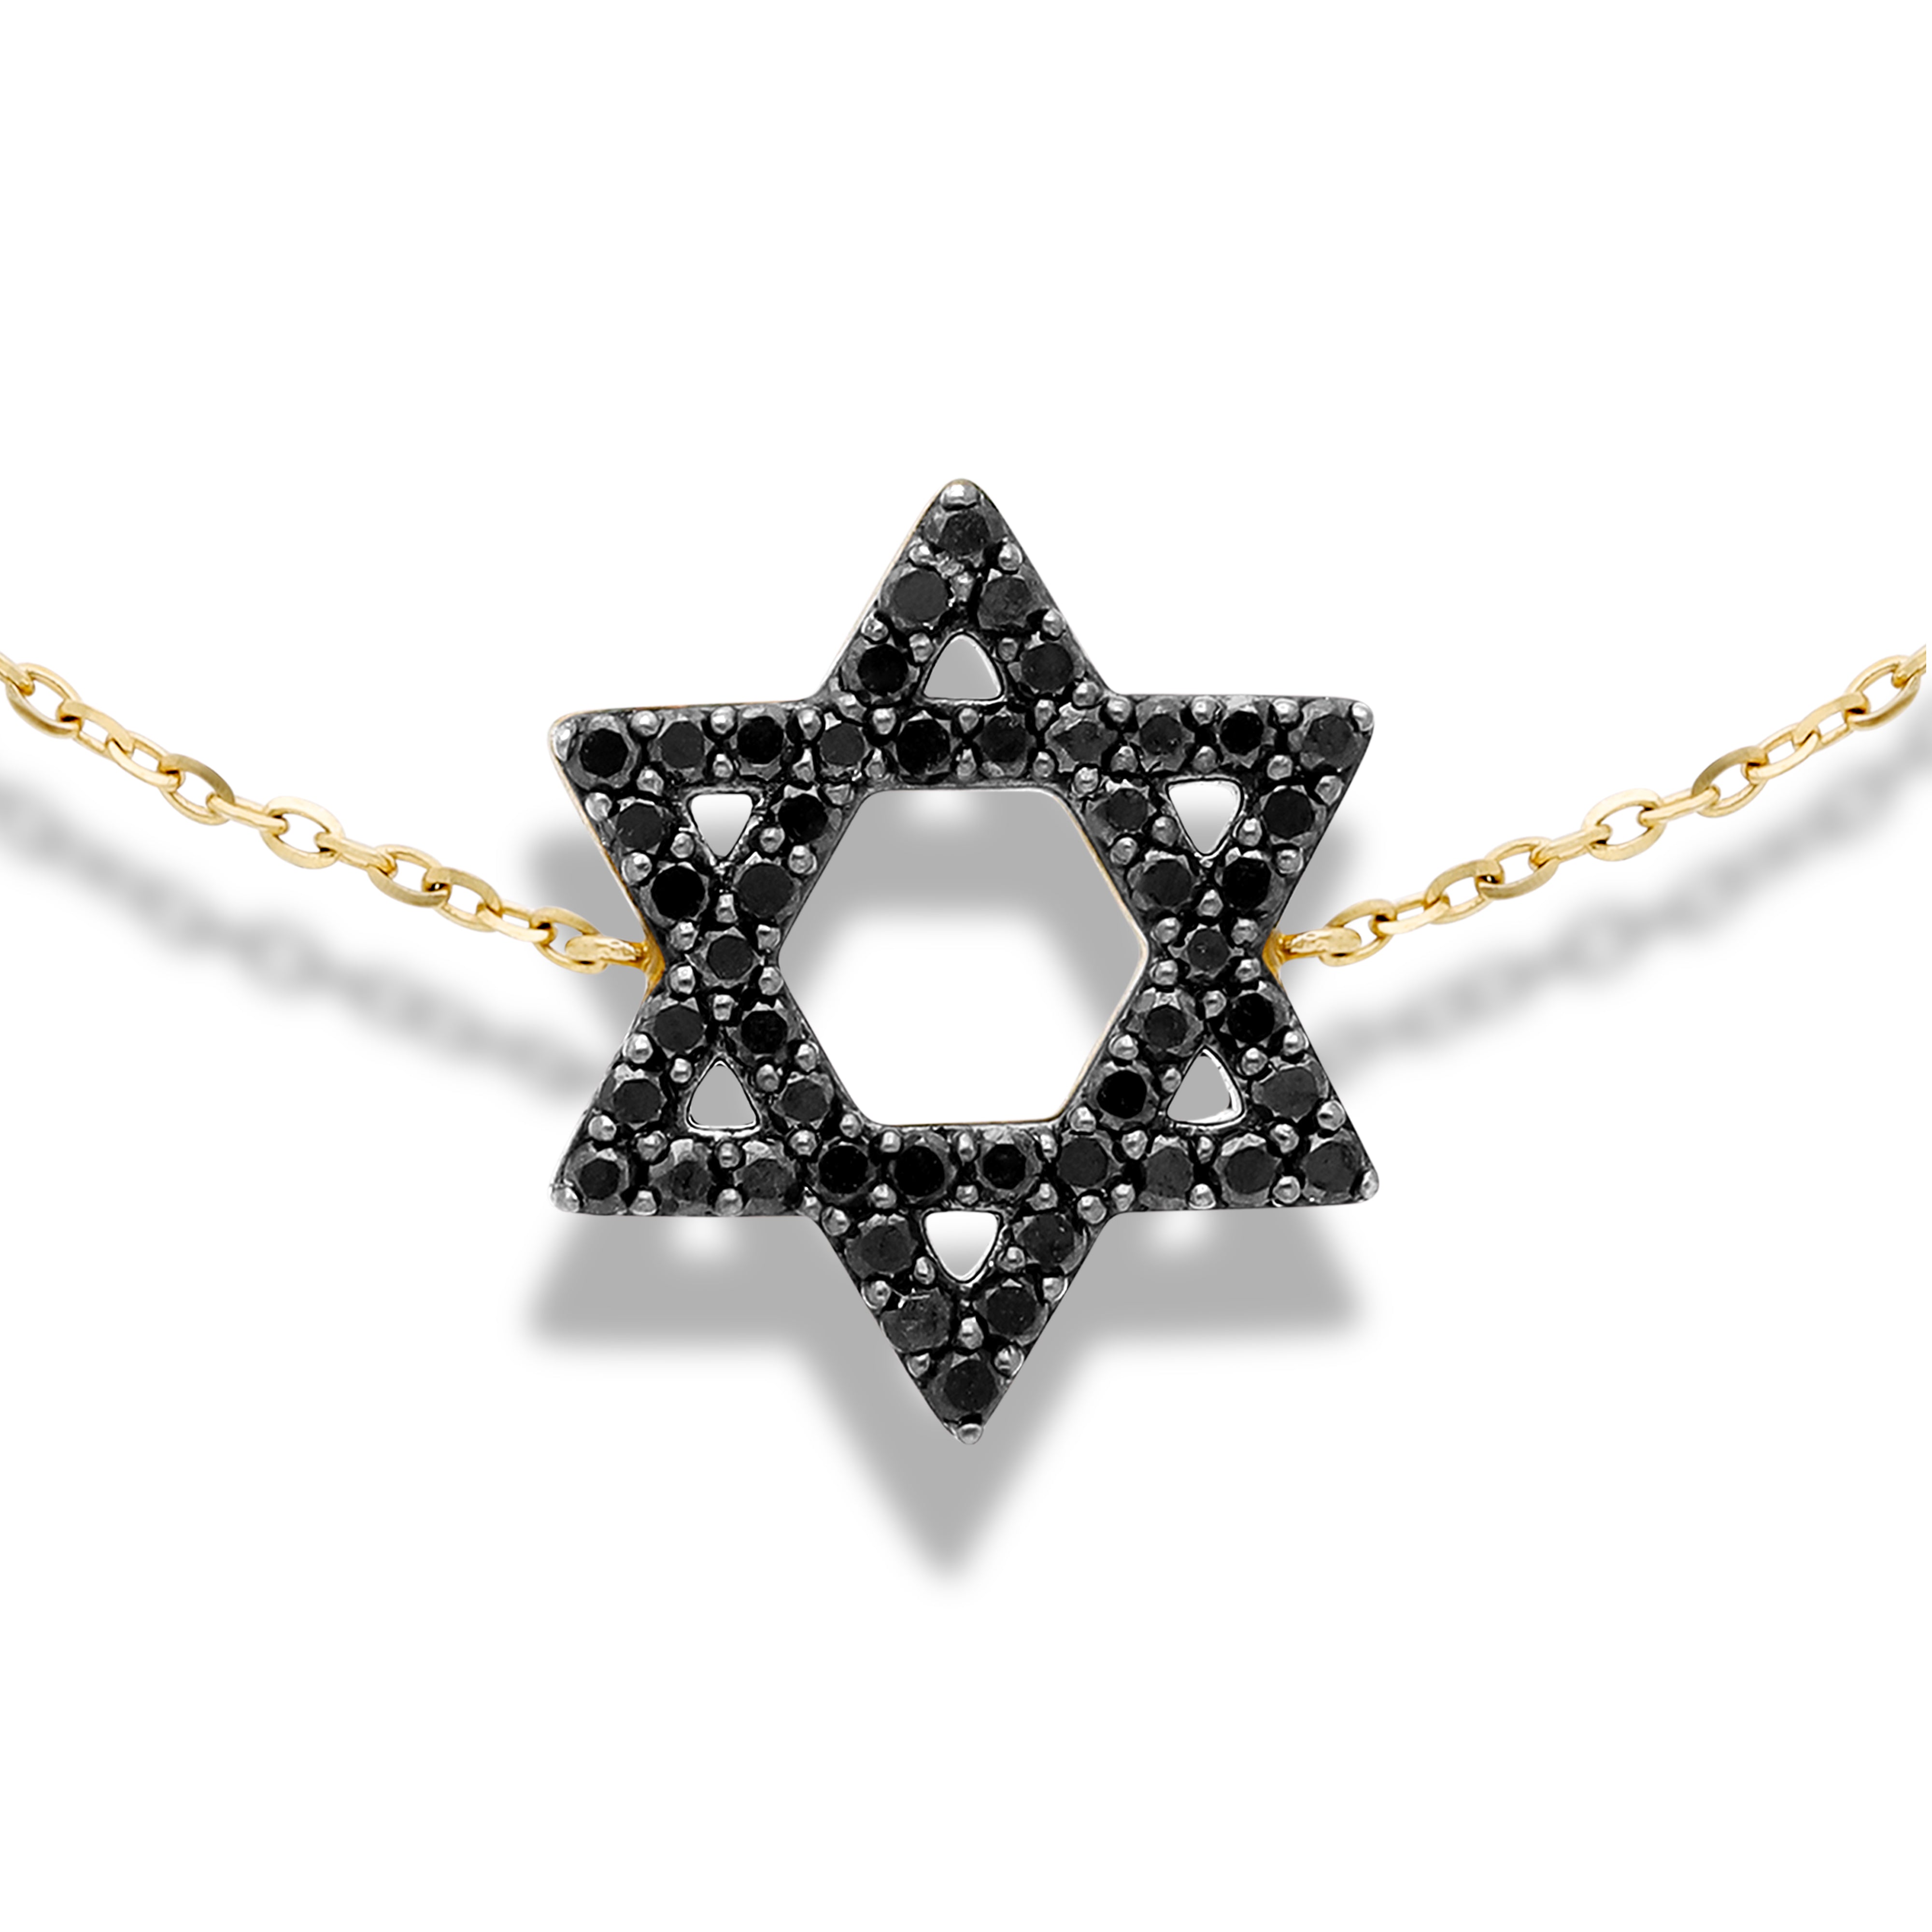 The Black Diamond Mazel Bracelet